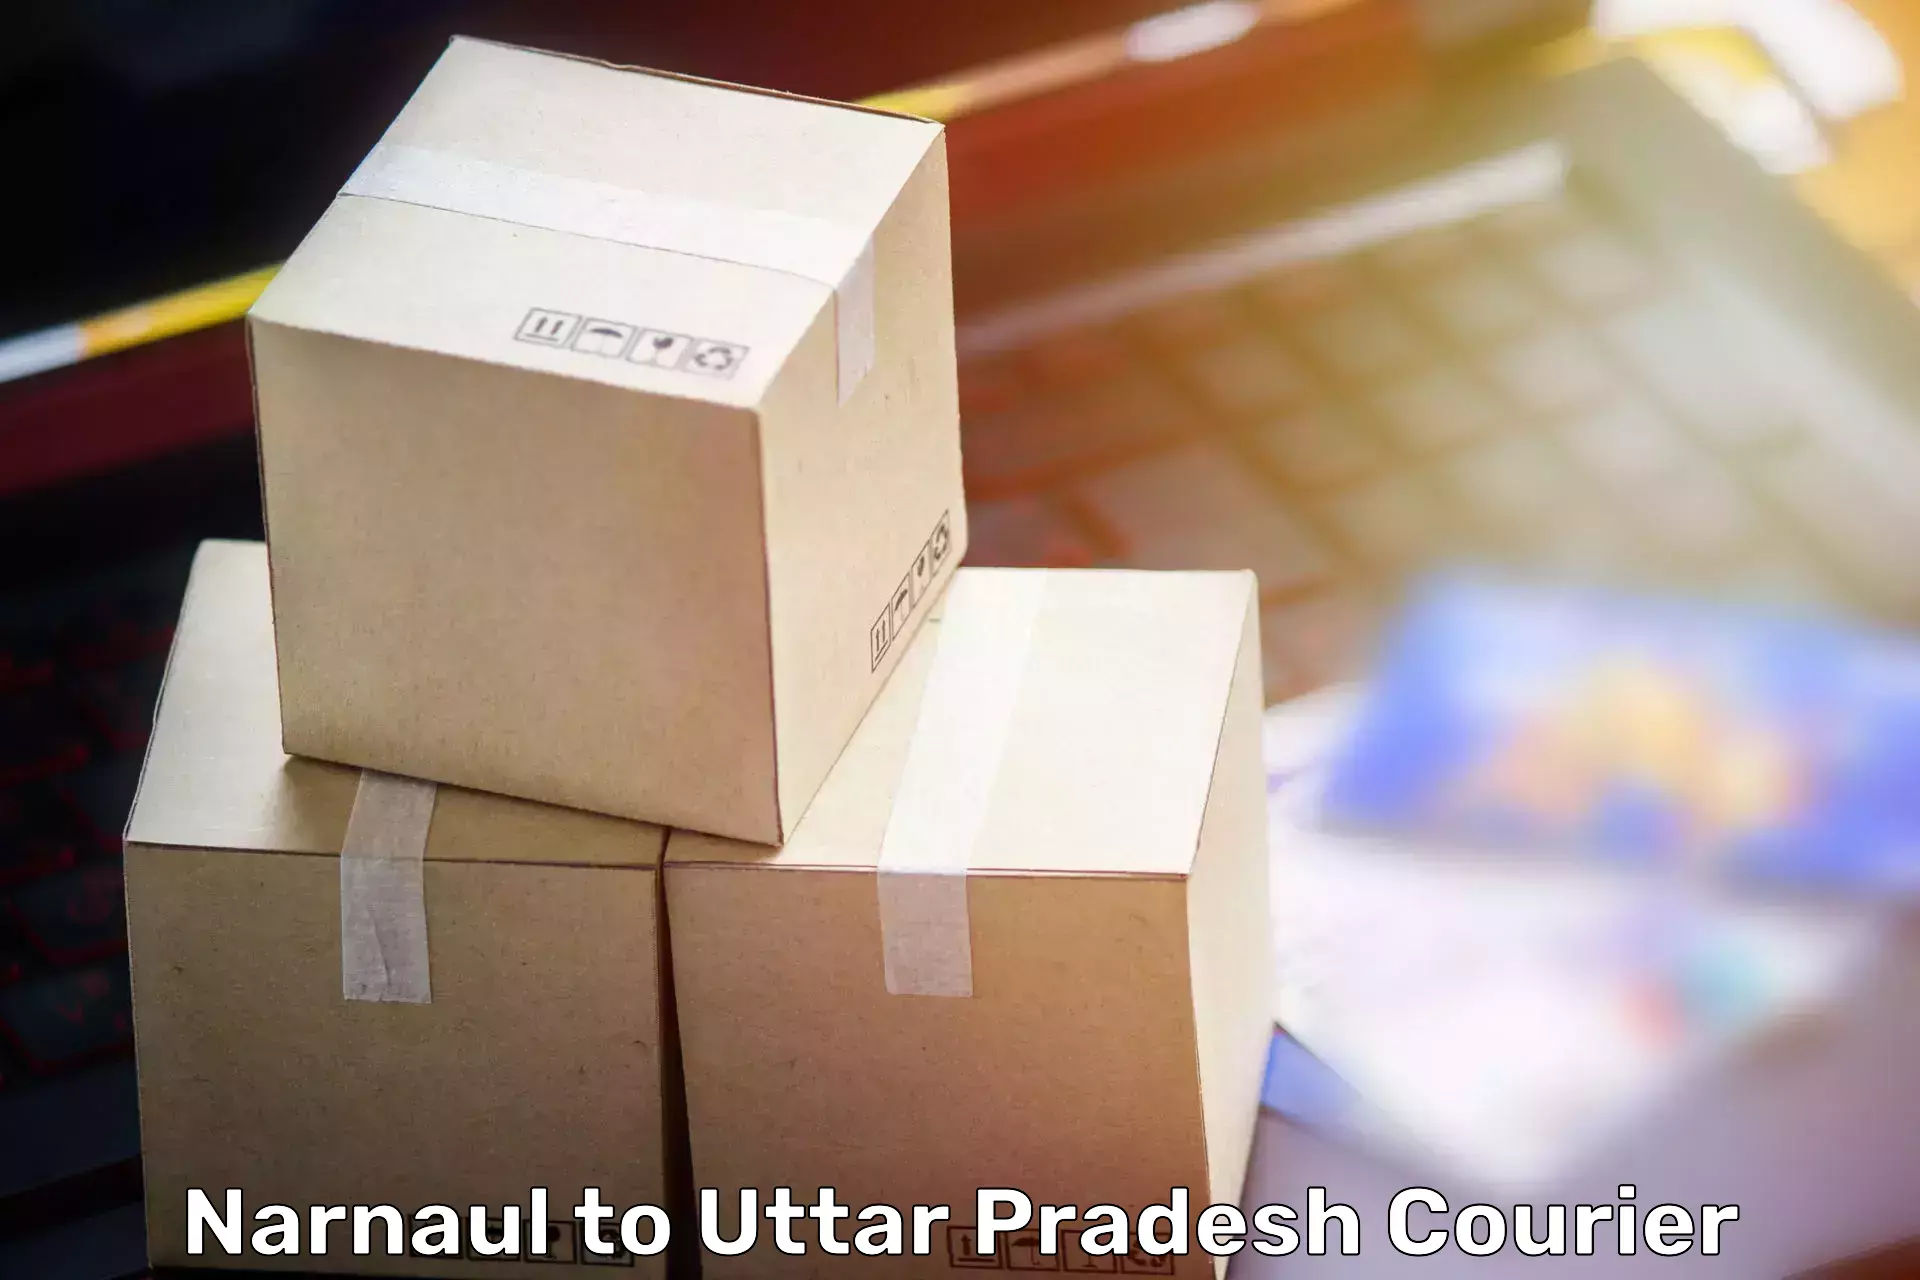 Moving and packing experts Narnaul to Varanasi